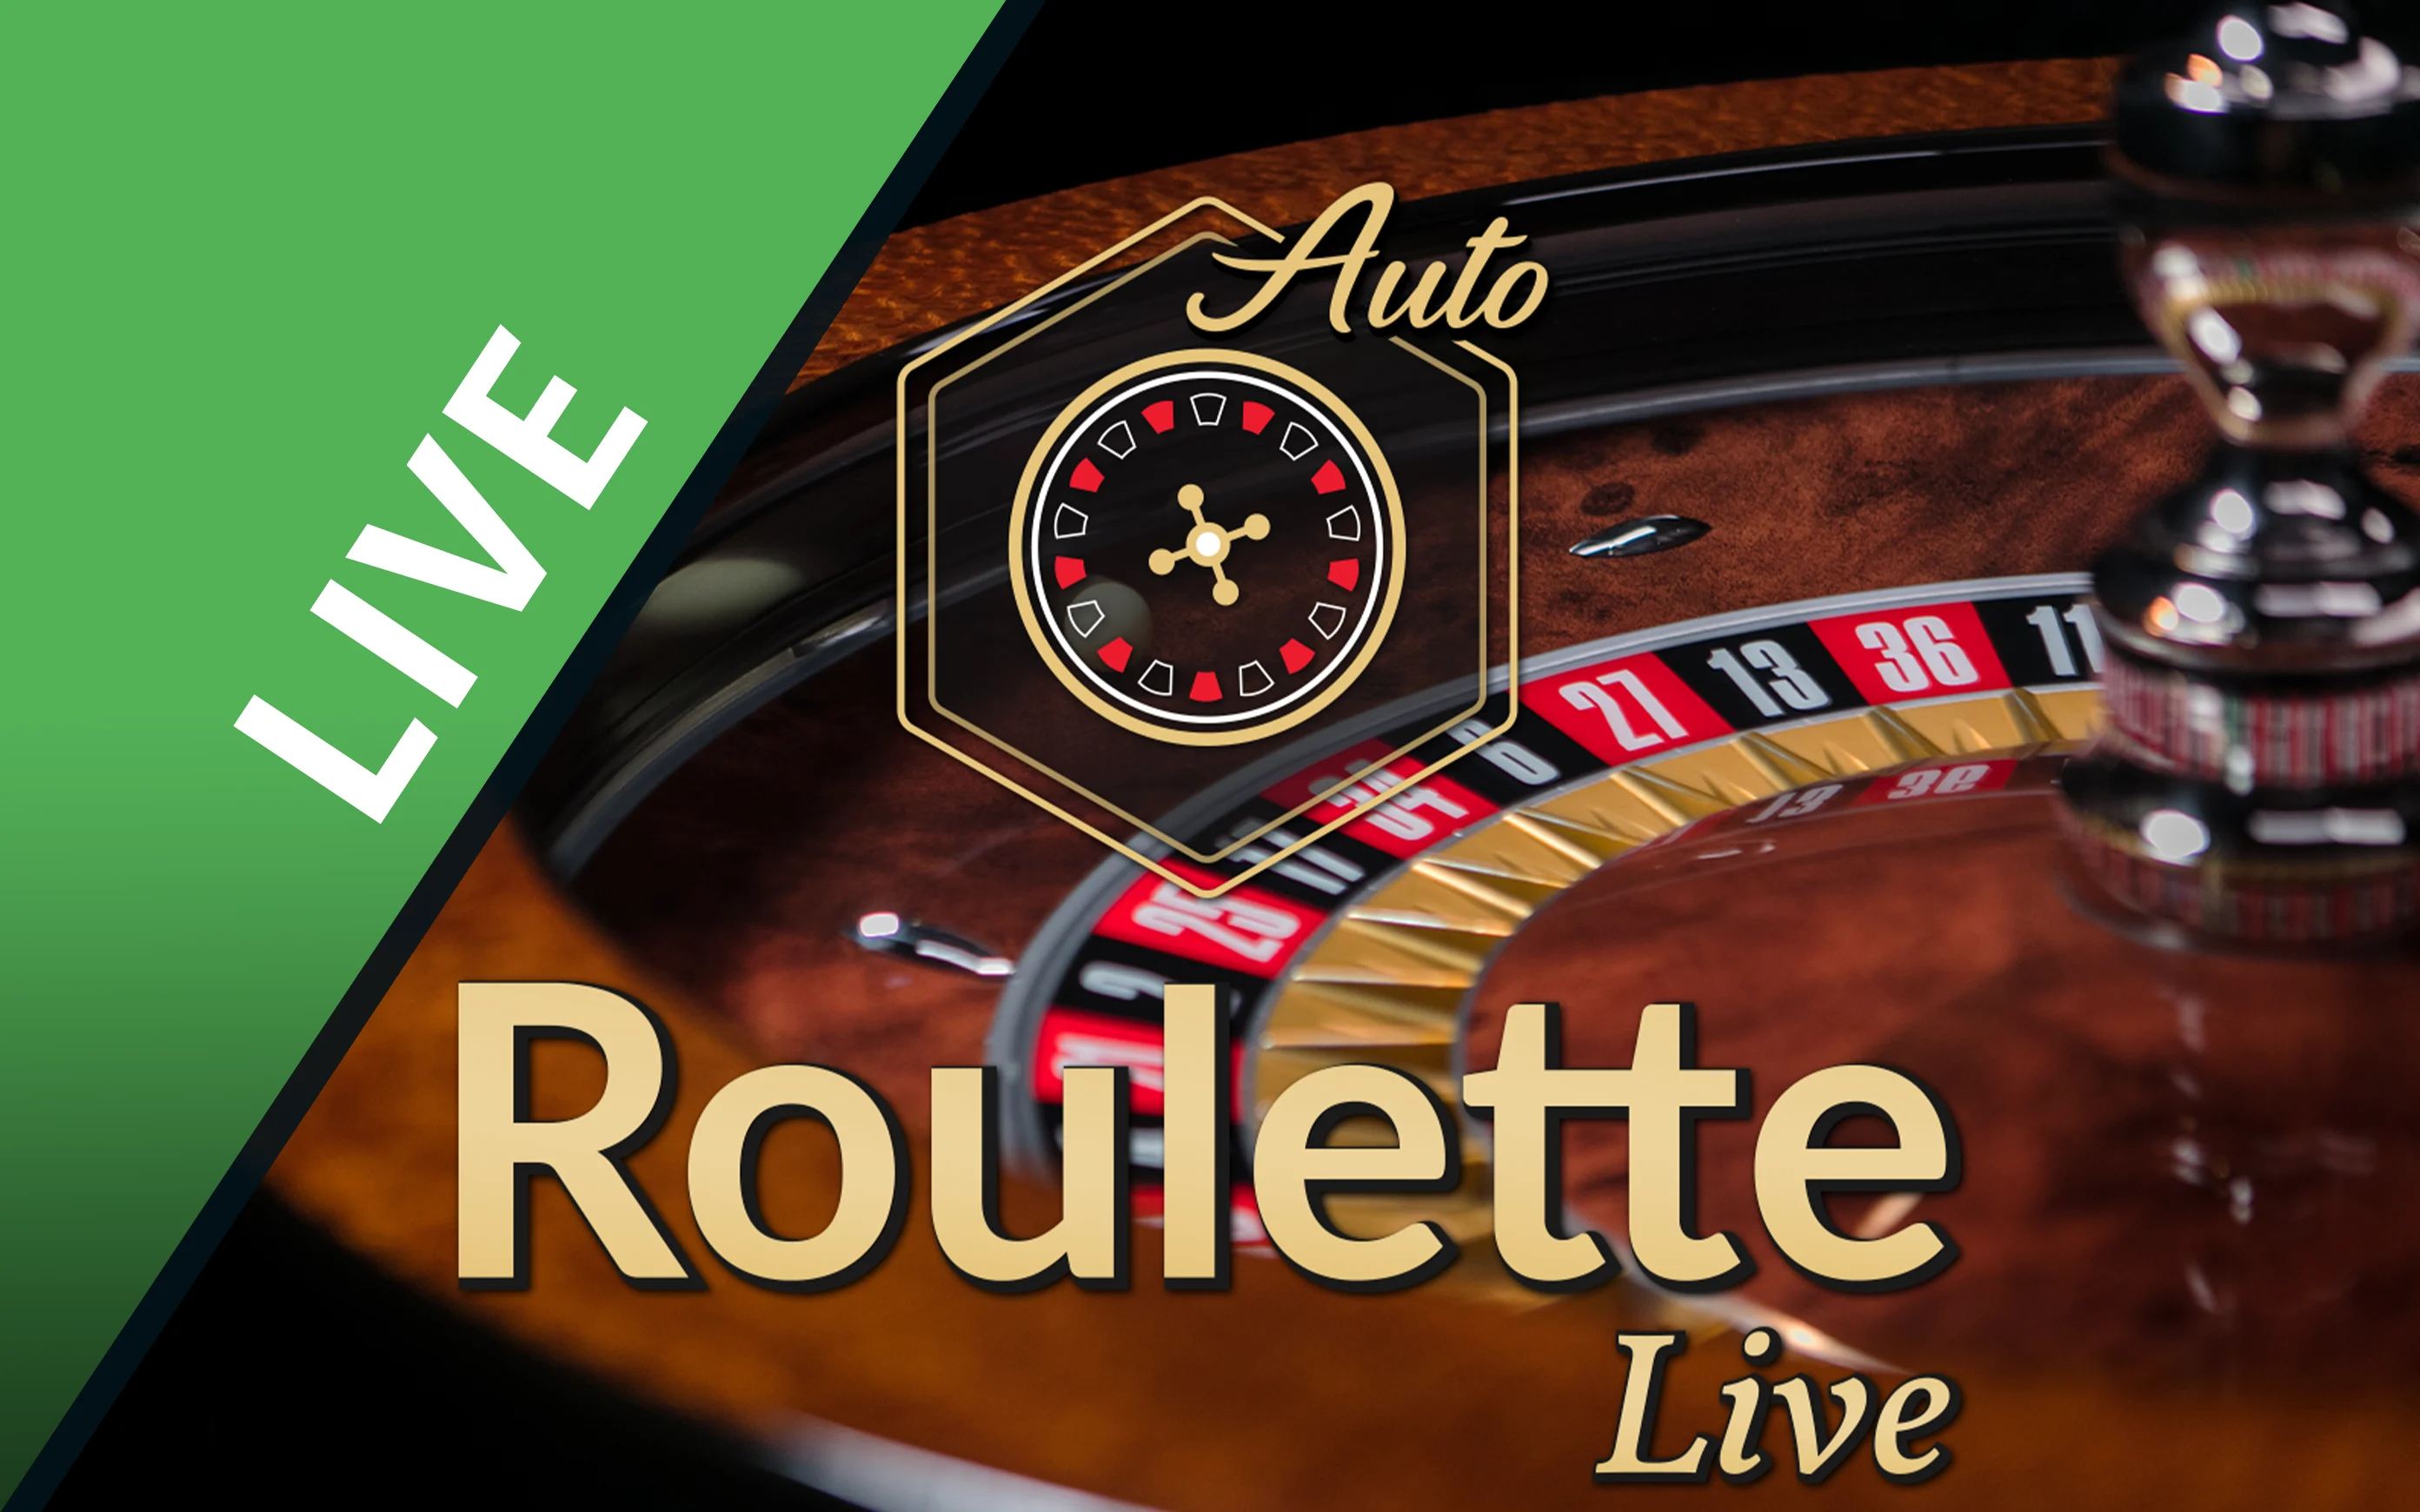 Грайте у Auto Roulette в онлайн-казино Starcasino.be